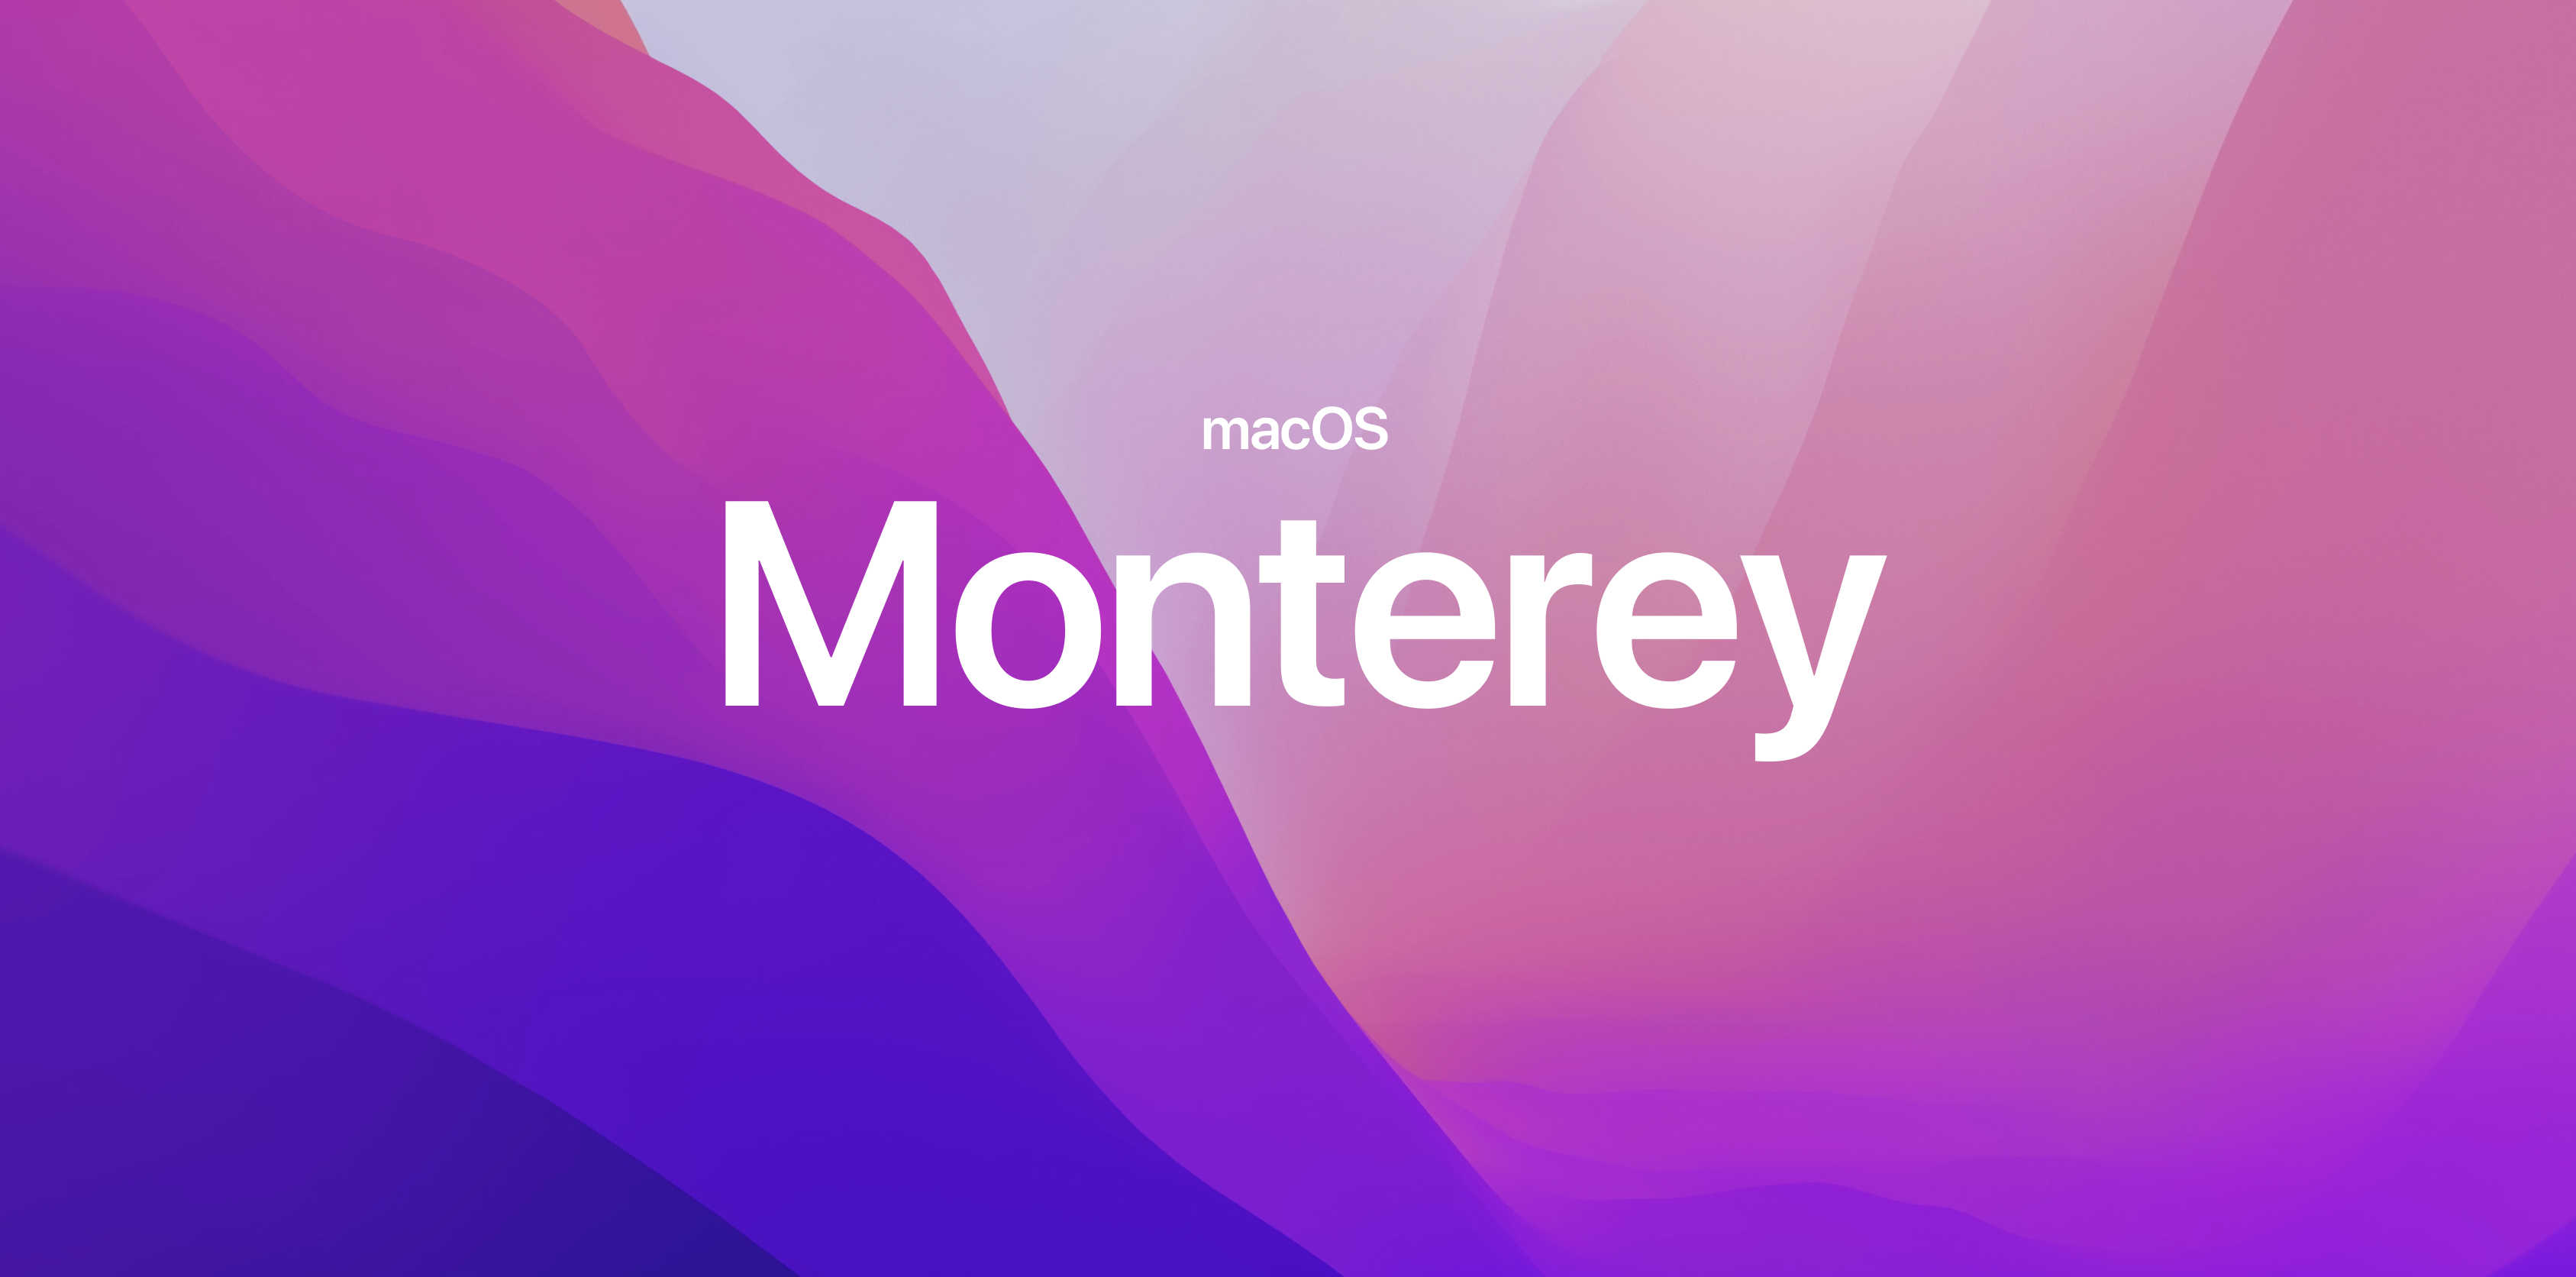 macos monterey m1 exclusive features